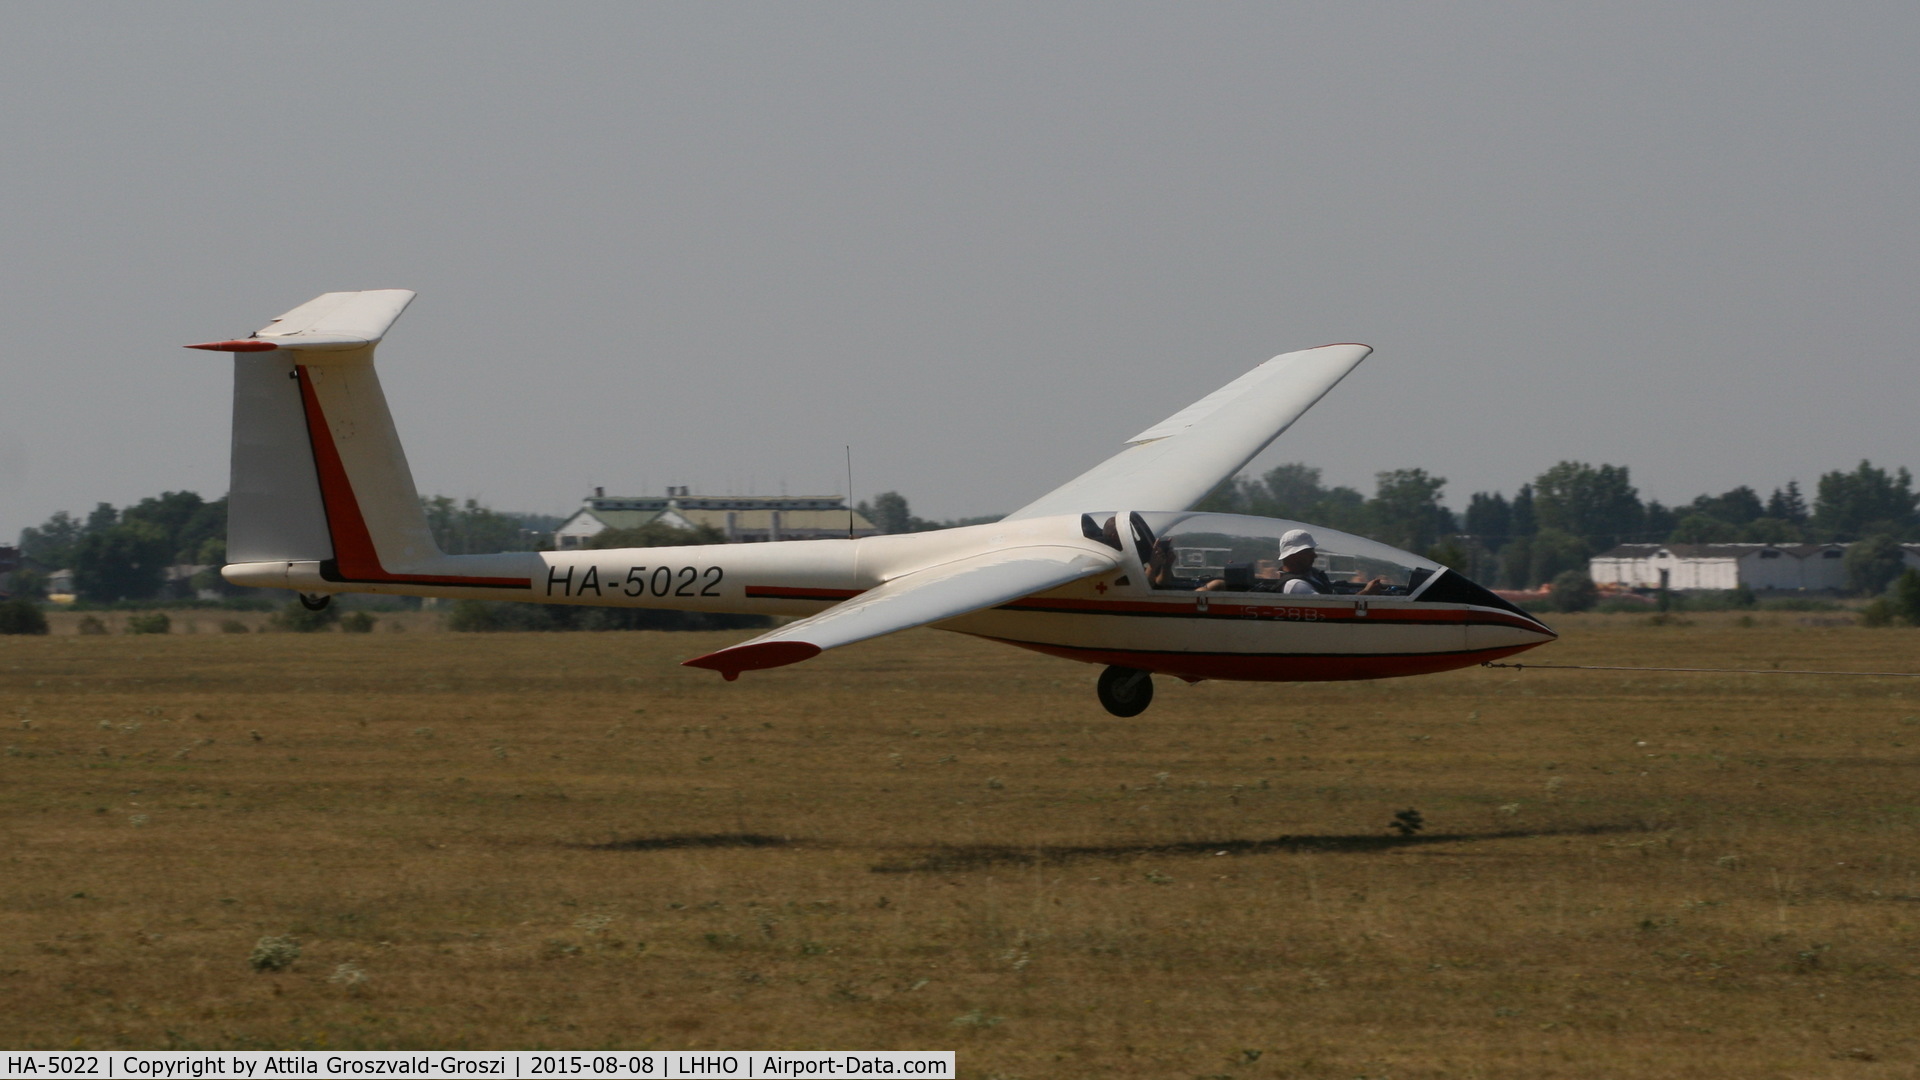 HA-5022, 1988 ICA IS-28B2 C/N 328, Hajdúszoboszló Airport, Hungary - 60. Hungary Gliding National Championship and third Civis Thermal Cup, 2015